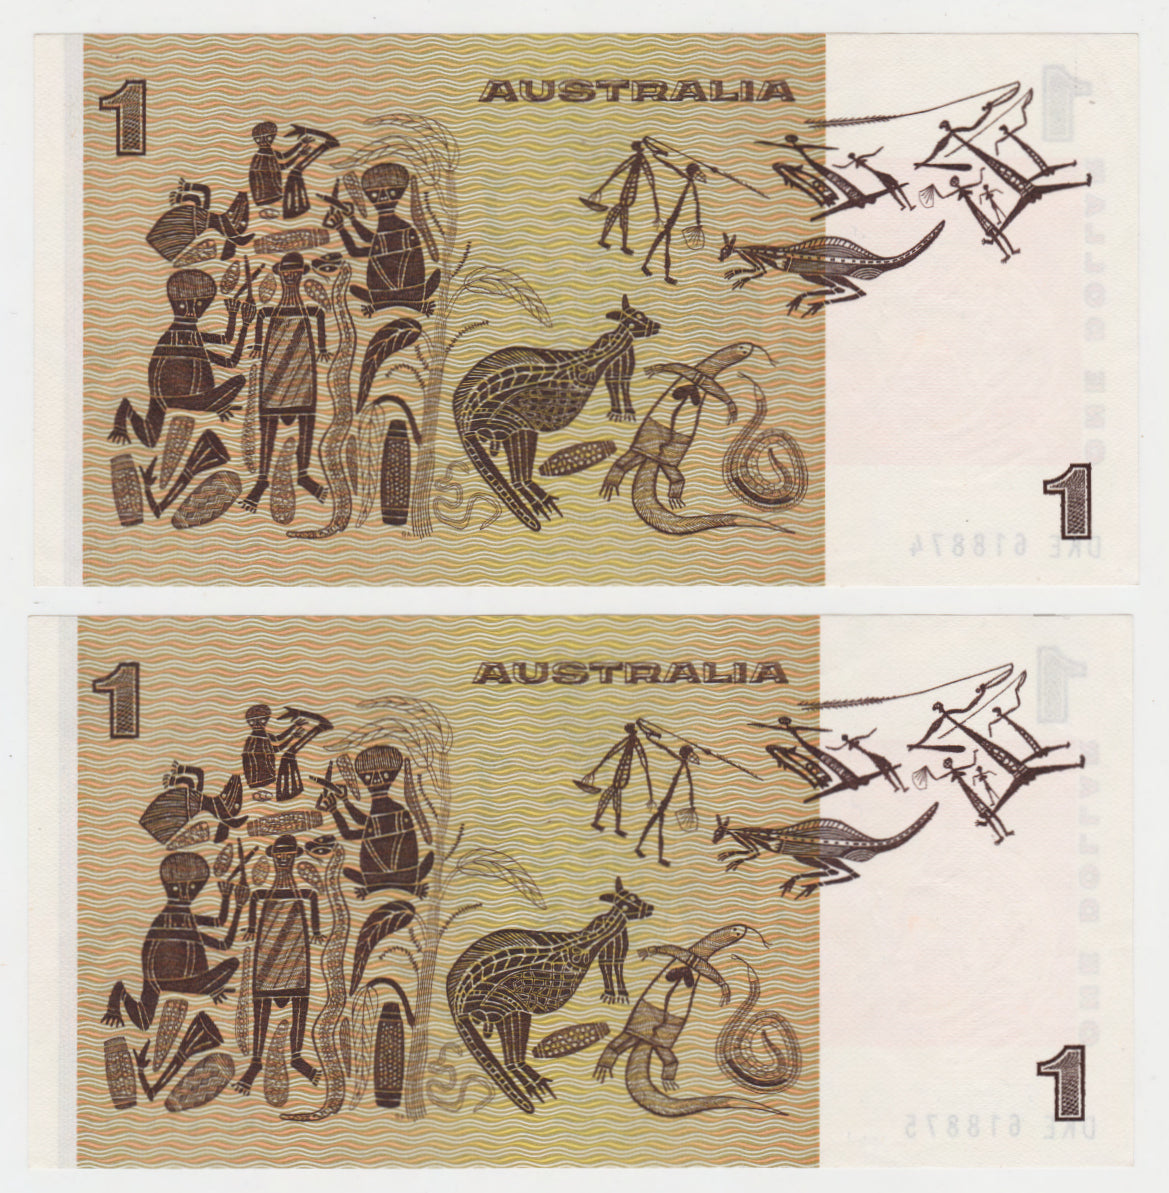 Australian 1982 1 Dollar Johnston Stone Notes Consecutive Pair s/n's DKE 618874 & 75